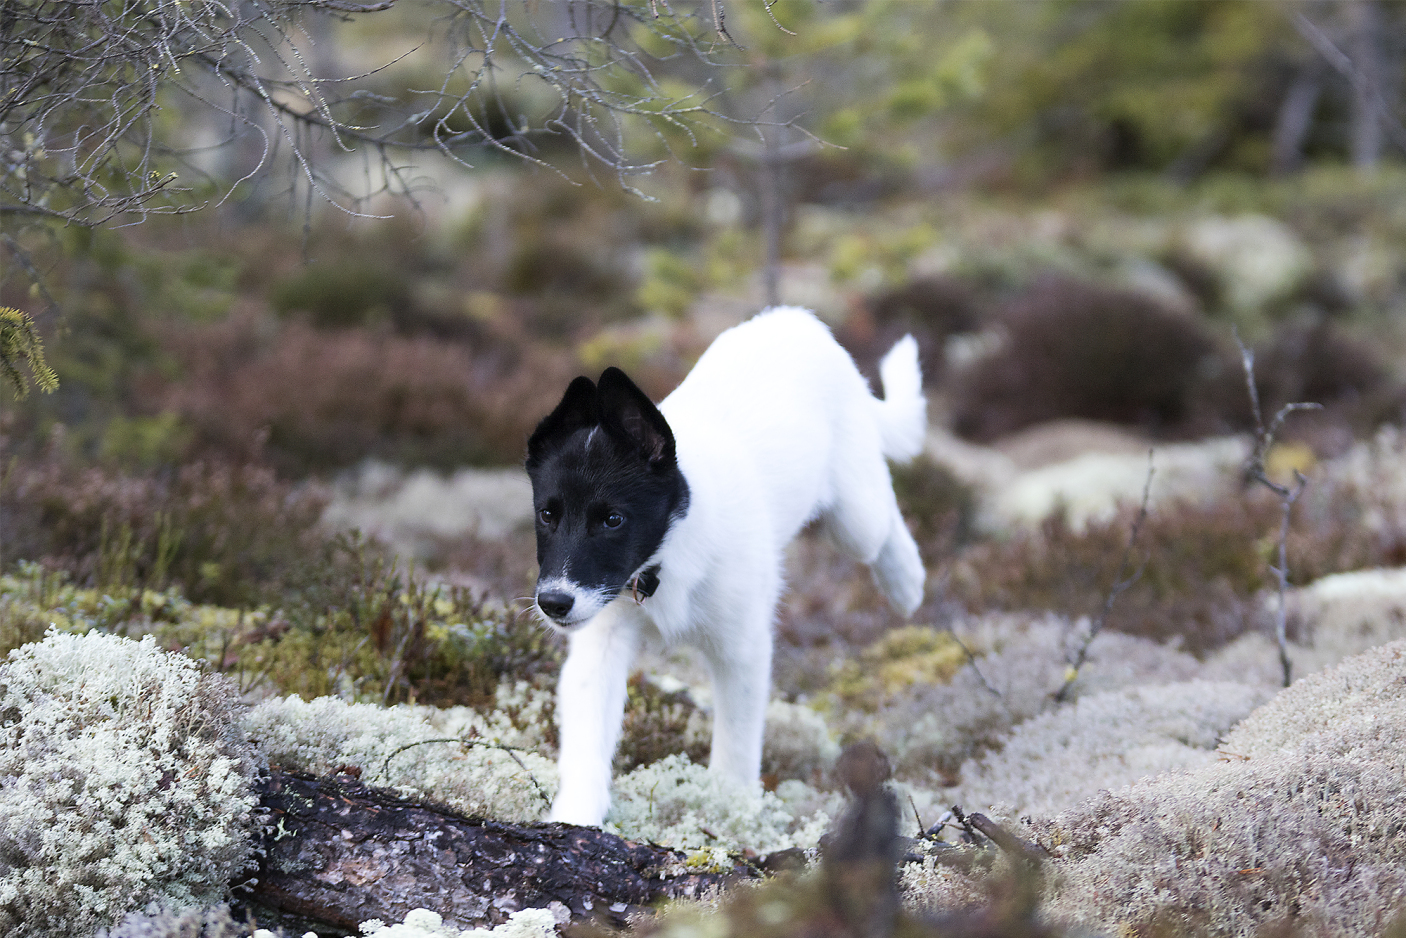 En alaska huskyvalp løper i skogsterreng med mose og lyng.